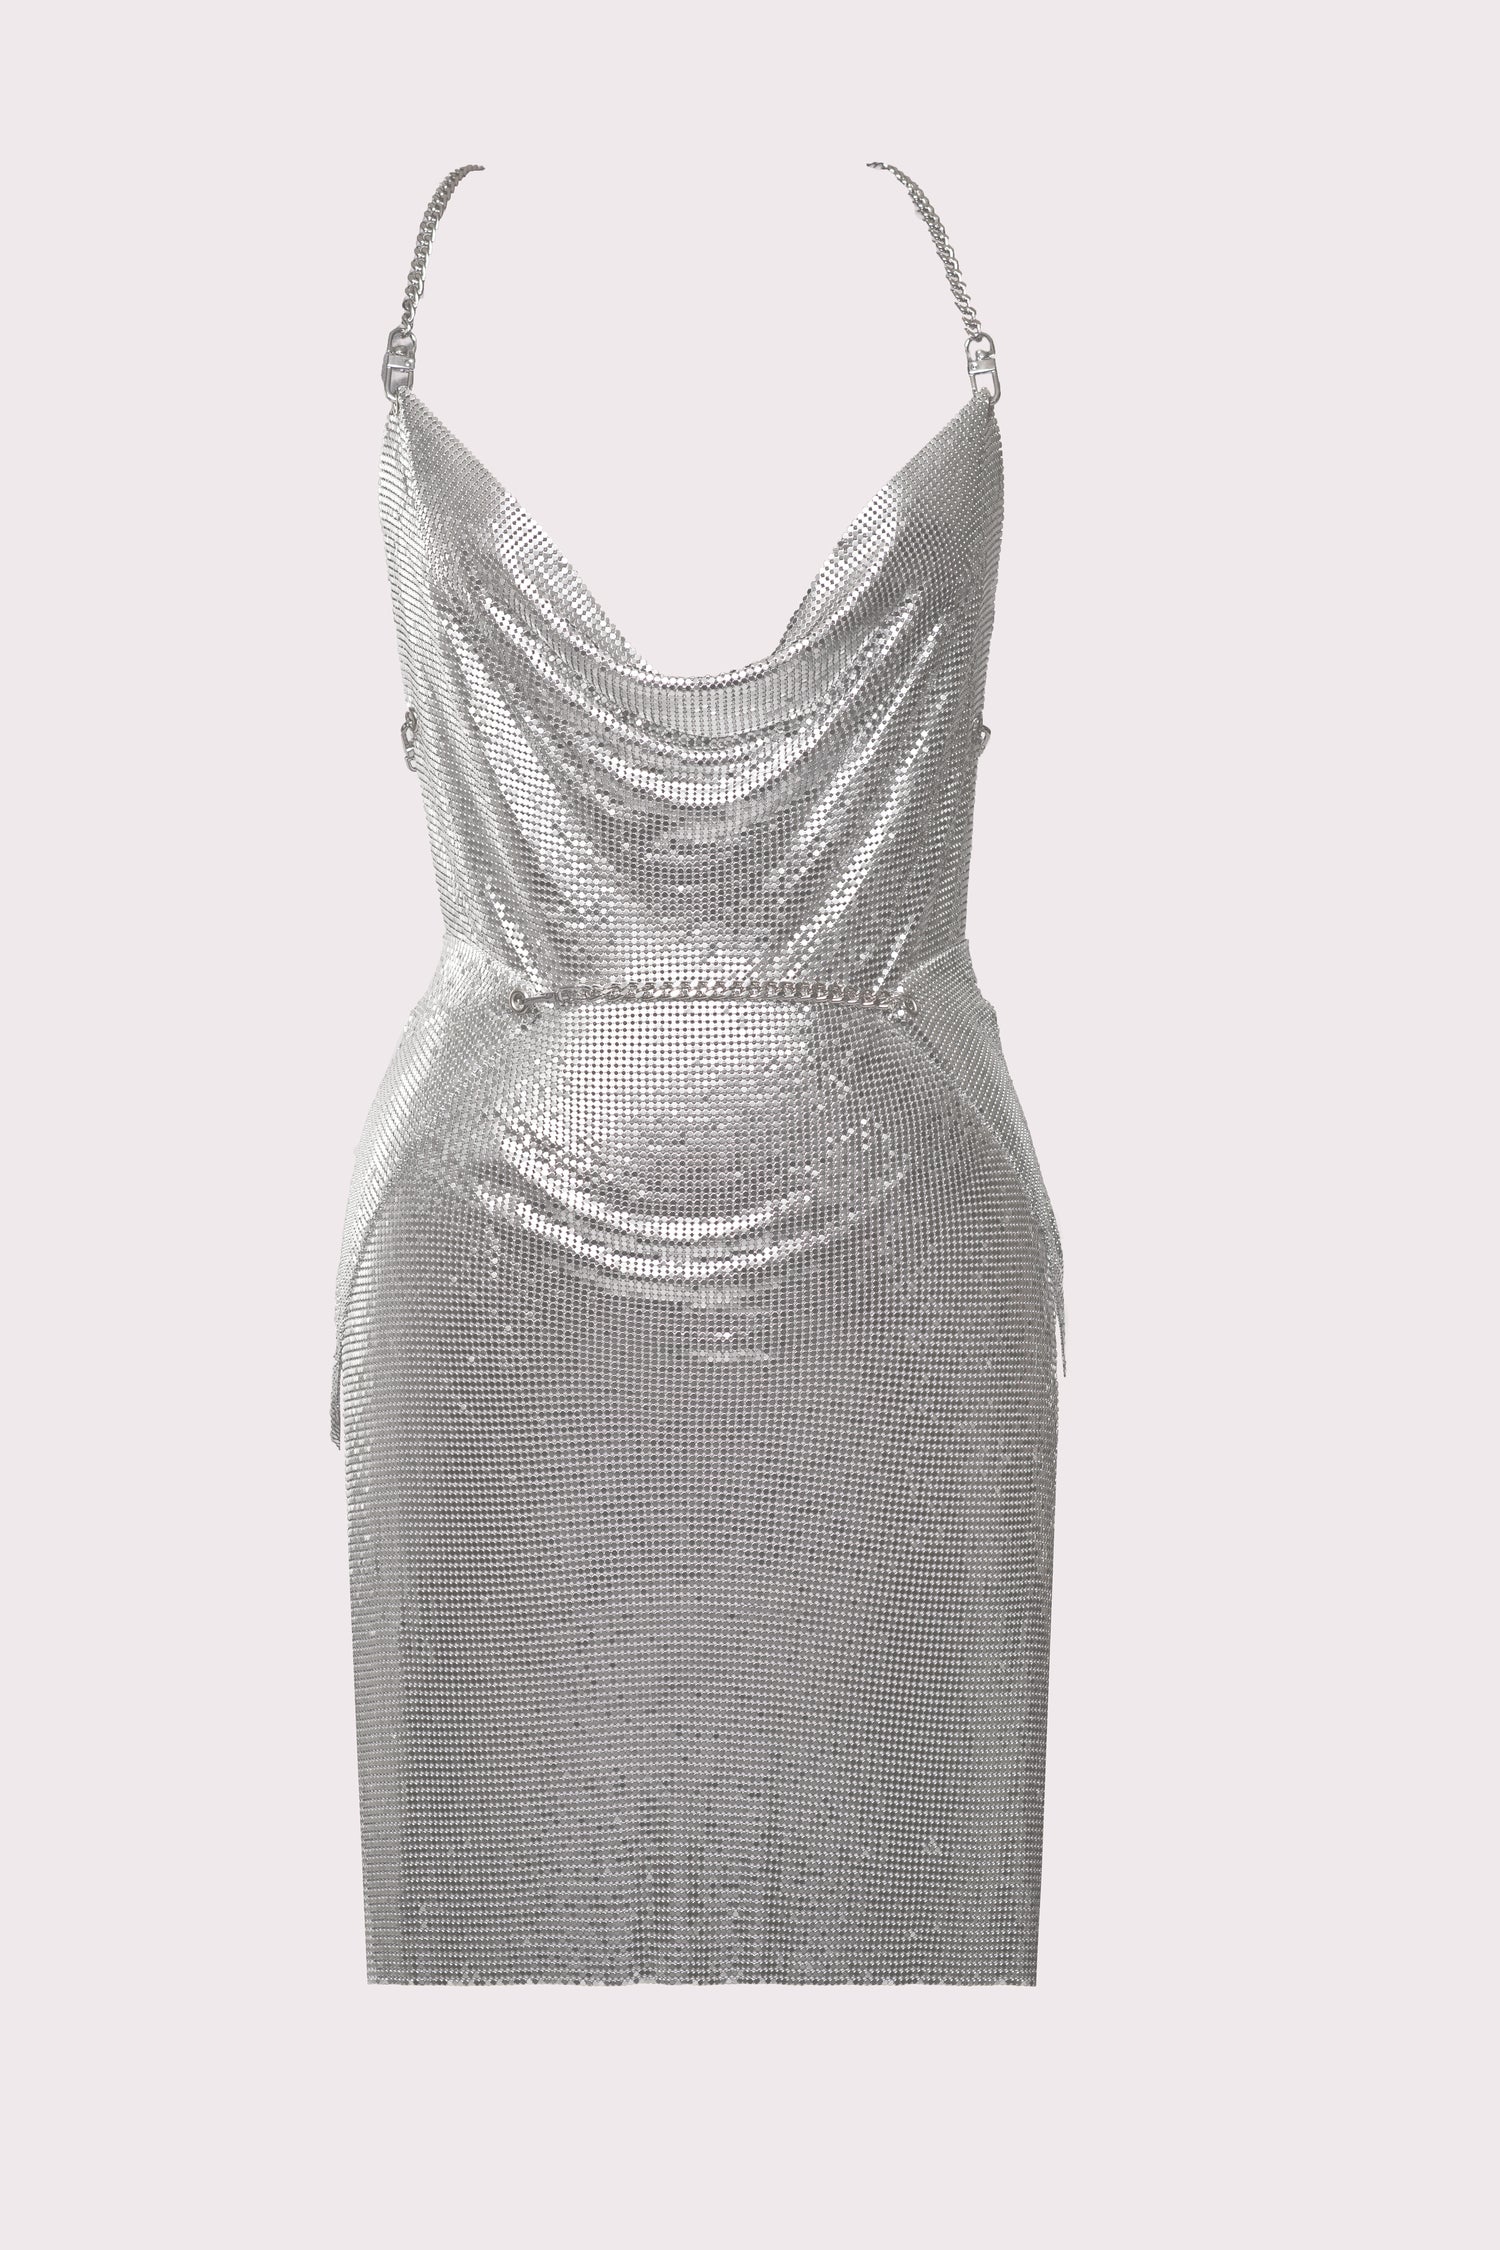 party dress in maglia metallica argento